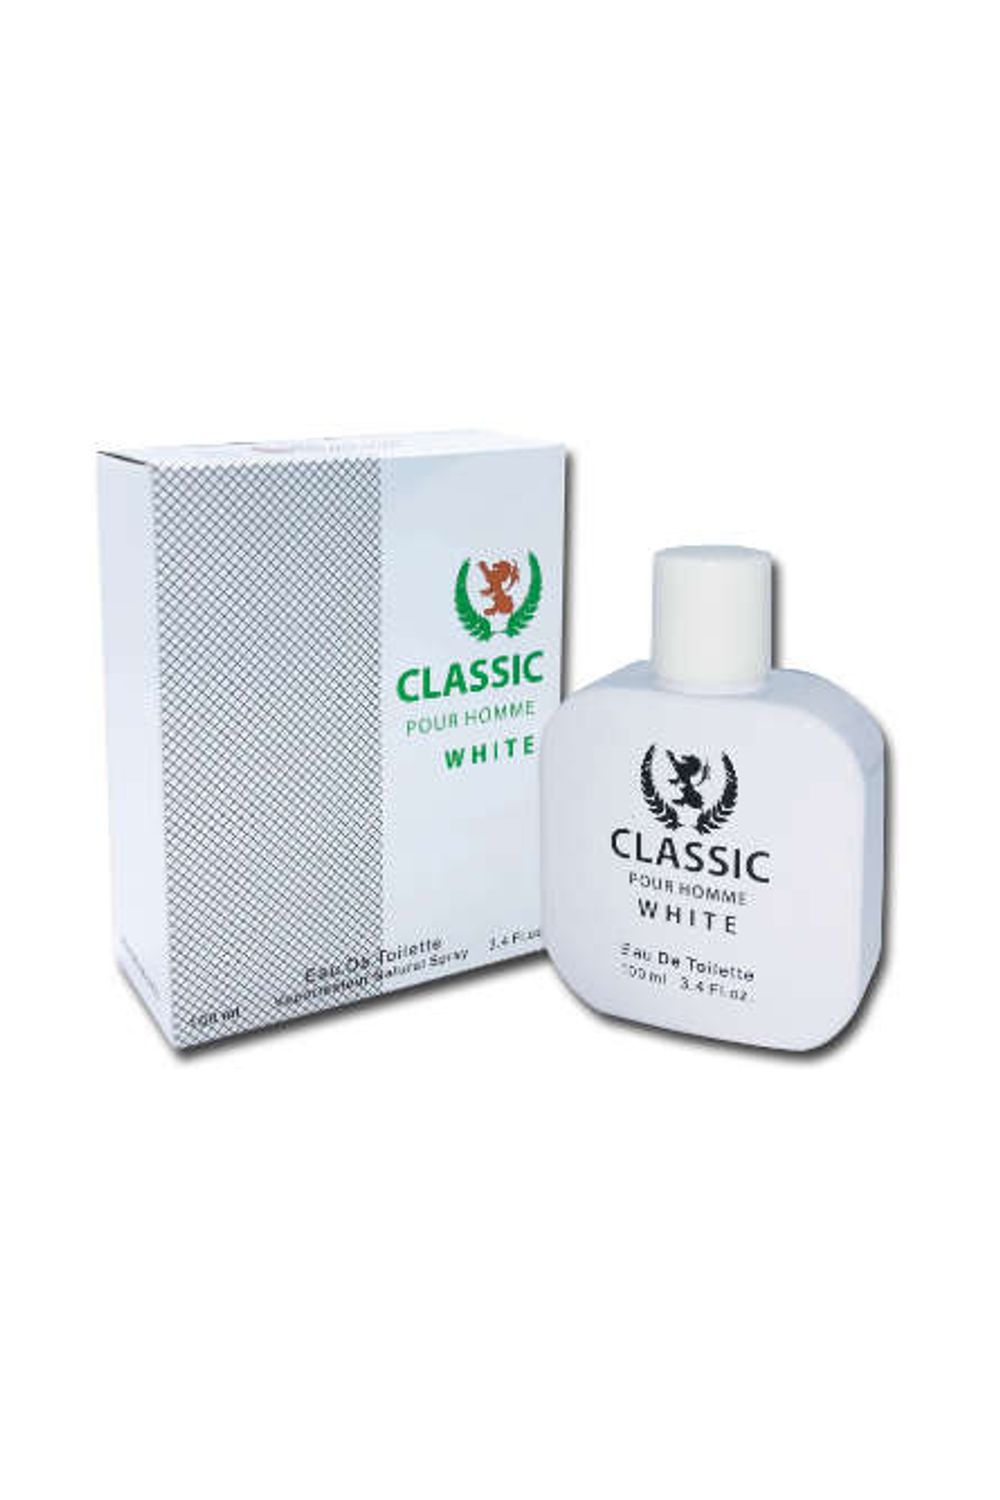 CLASSIC WHITE